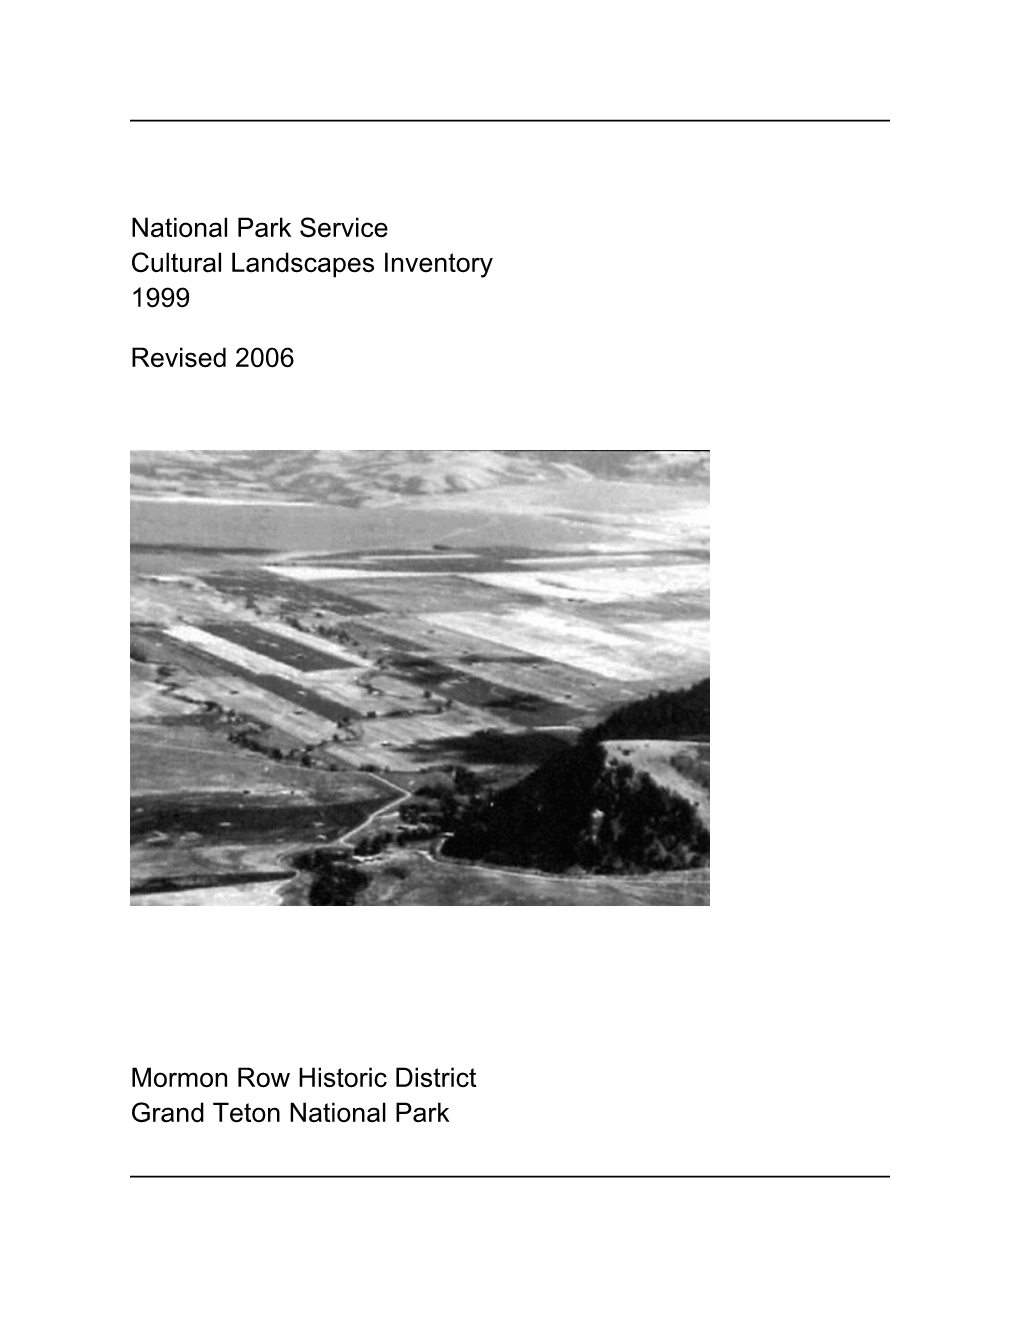 National Park Service Cultural Landscapes Inventory 1999